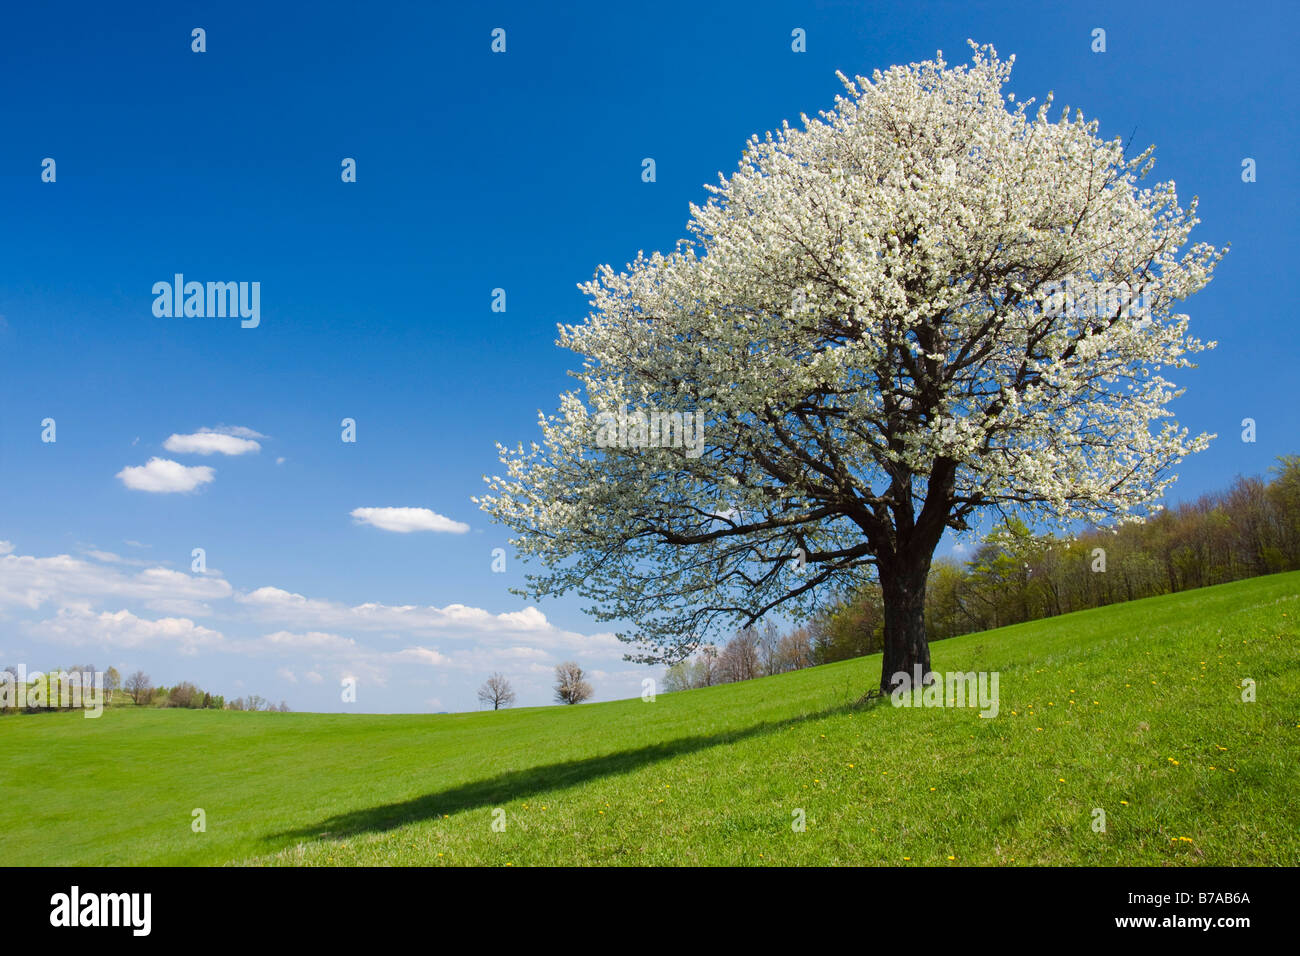 Spring landscape in Planavy, Bile Karpaty, White Carpathian Mountains, protected landscape area, Moravia, Czech Republic, Europe Stock Photo